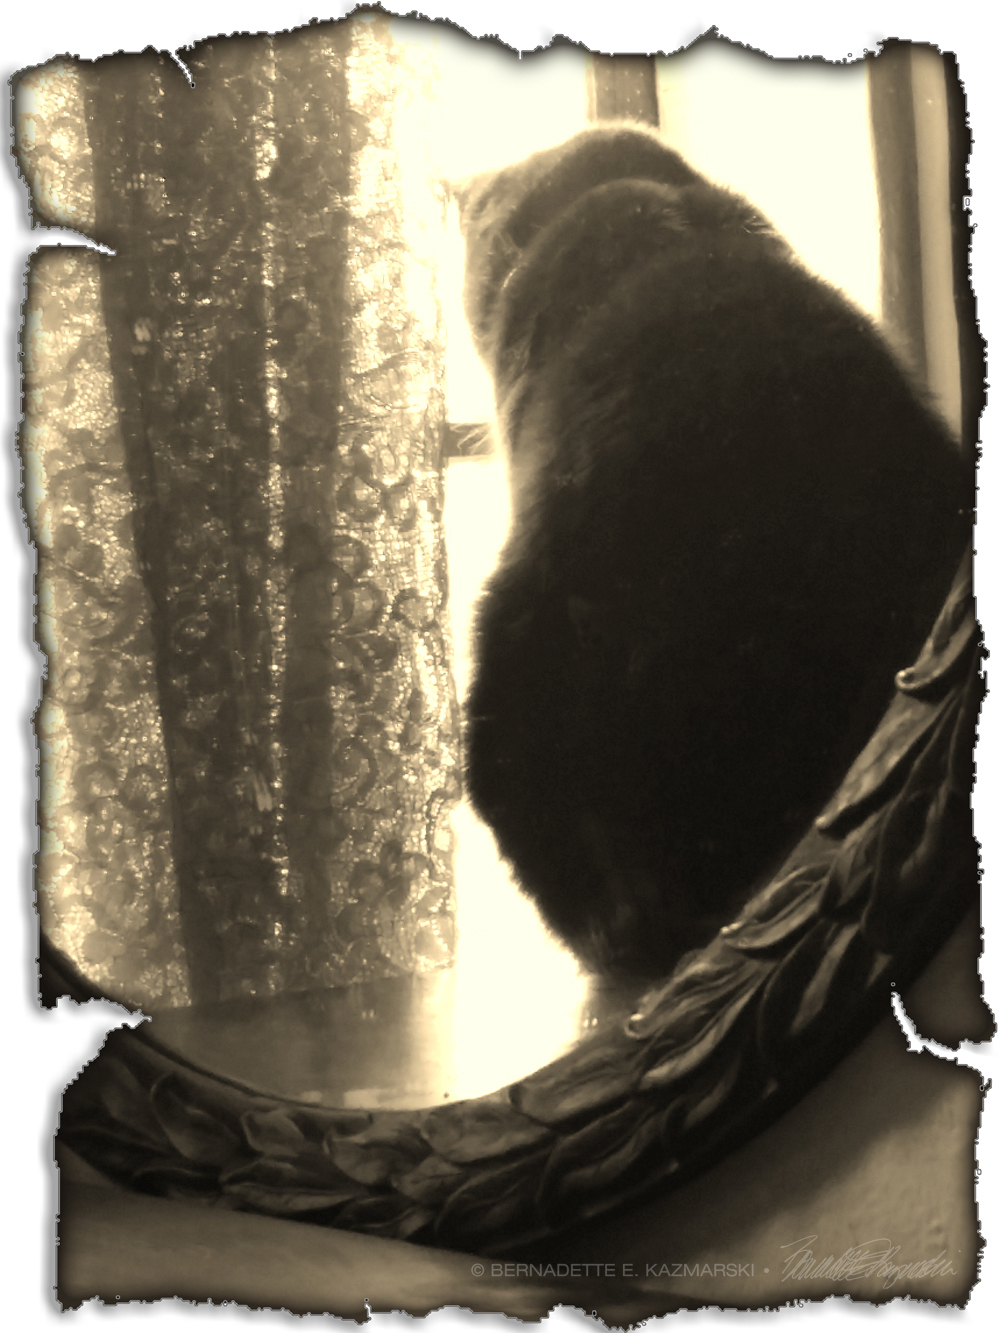 black cat in vintage photo.